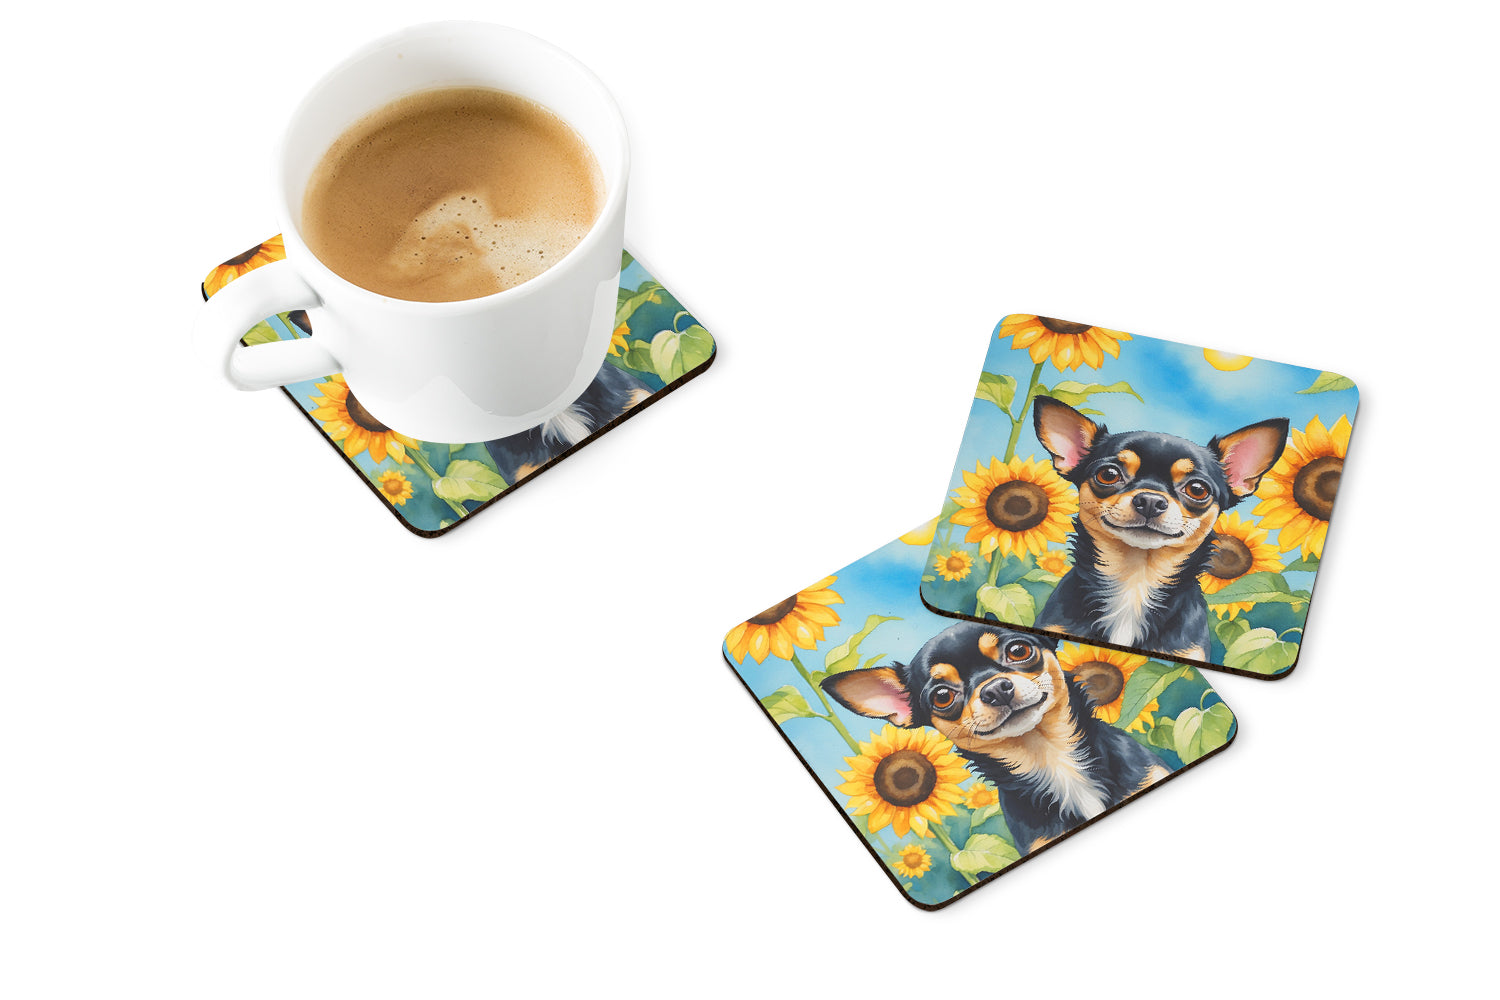 Chihuahua in Sunflowers Foam Coasters